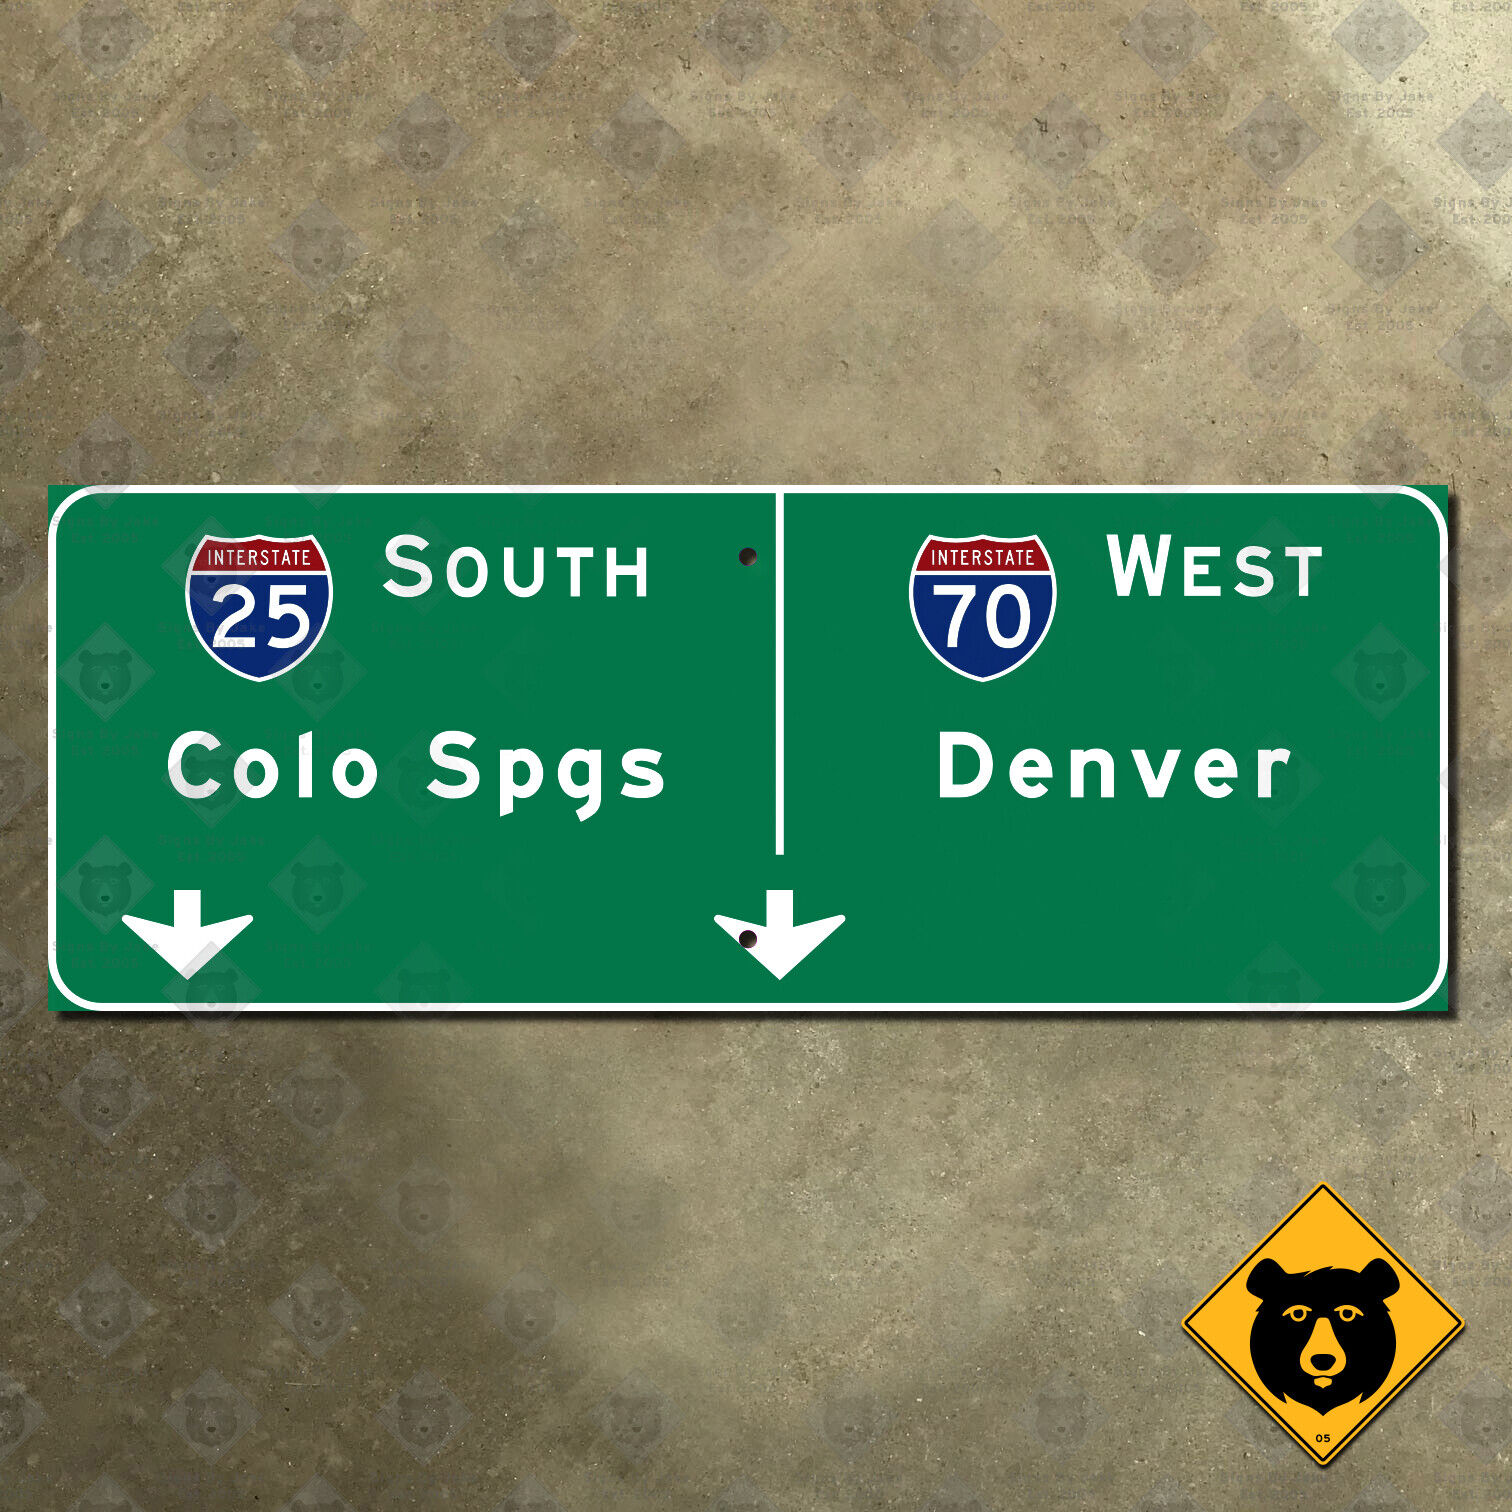 Interstate 25 South Colorado Springs, Interstate 70 West Denver exit sign 32x12